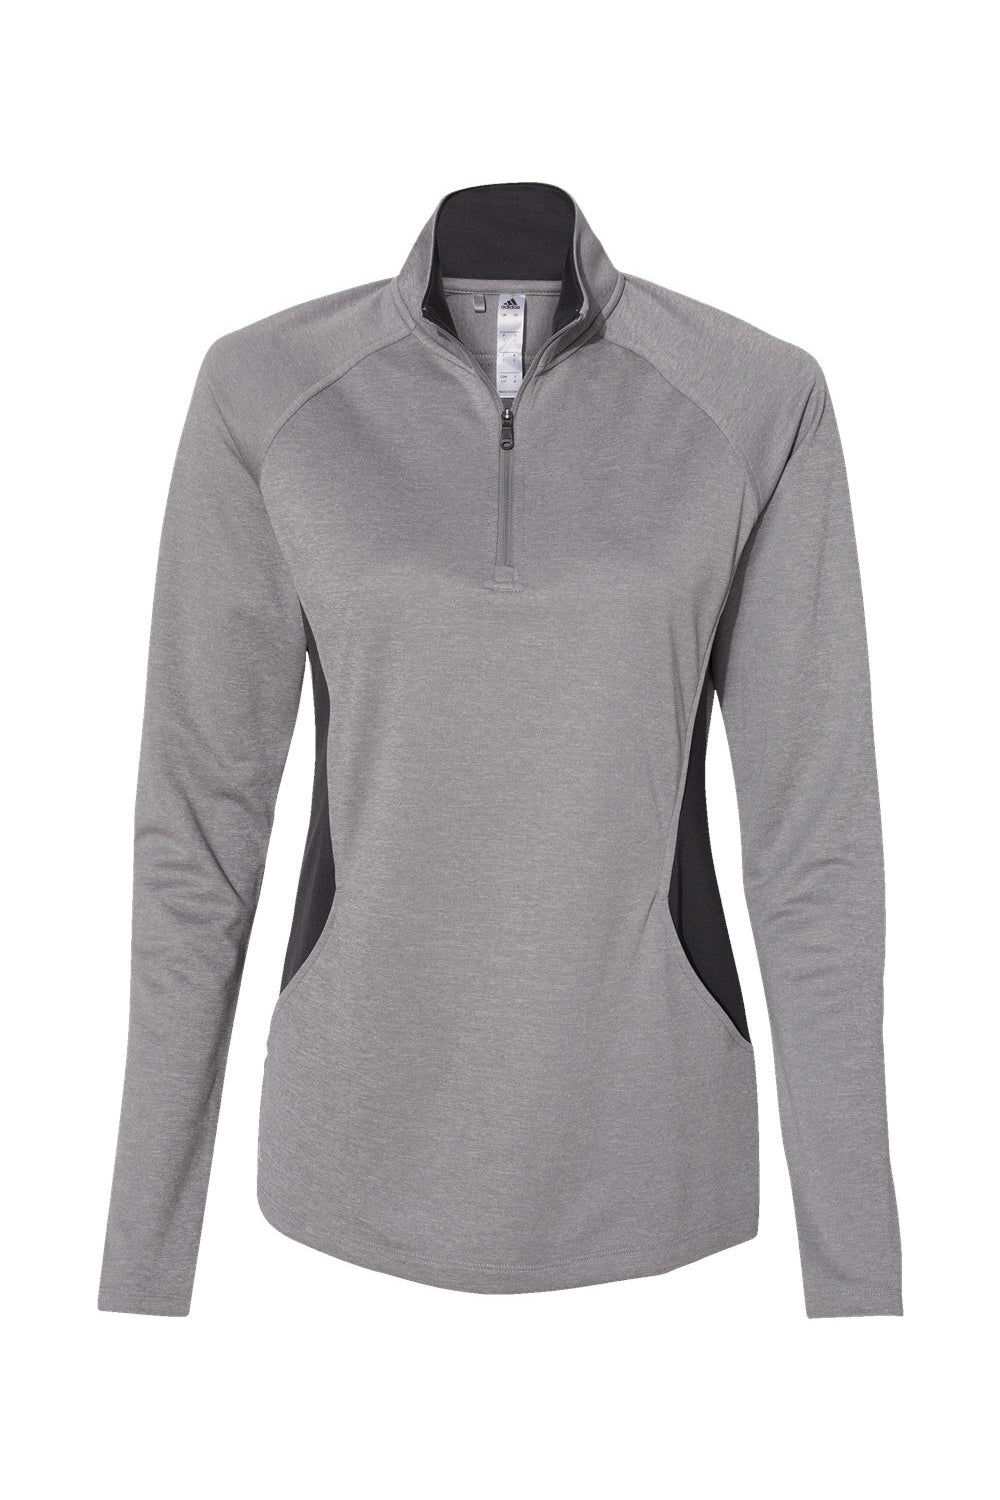 Adidas A281 Womens UPF 50+ 1/4 Zip Sweatshirt Heather Grey/Carbon Grey Flat Front